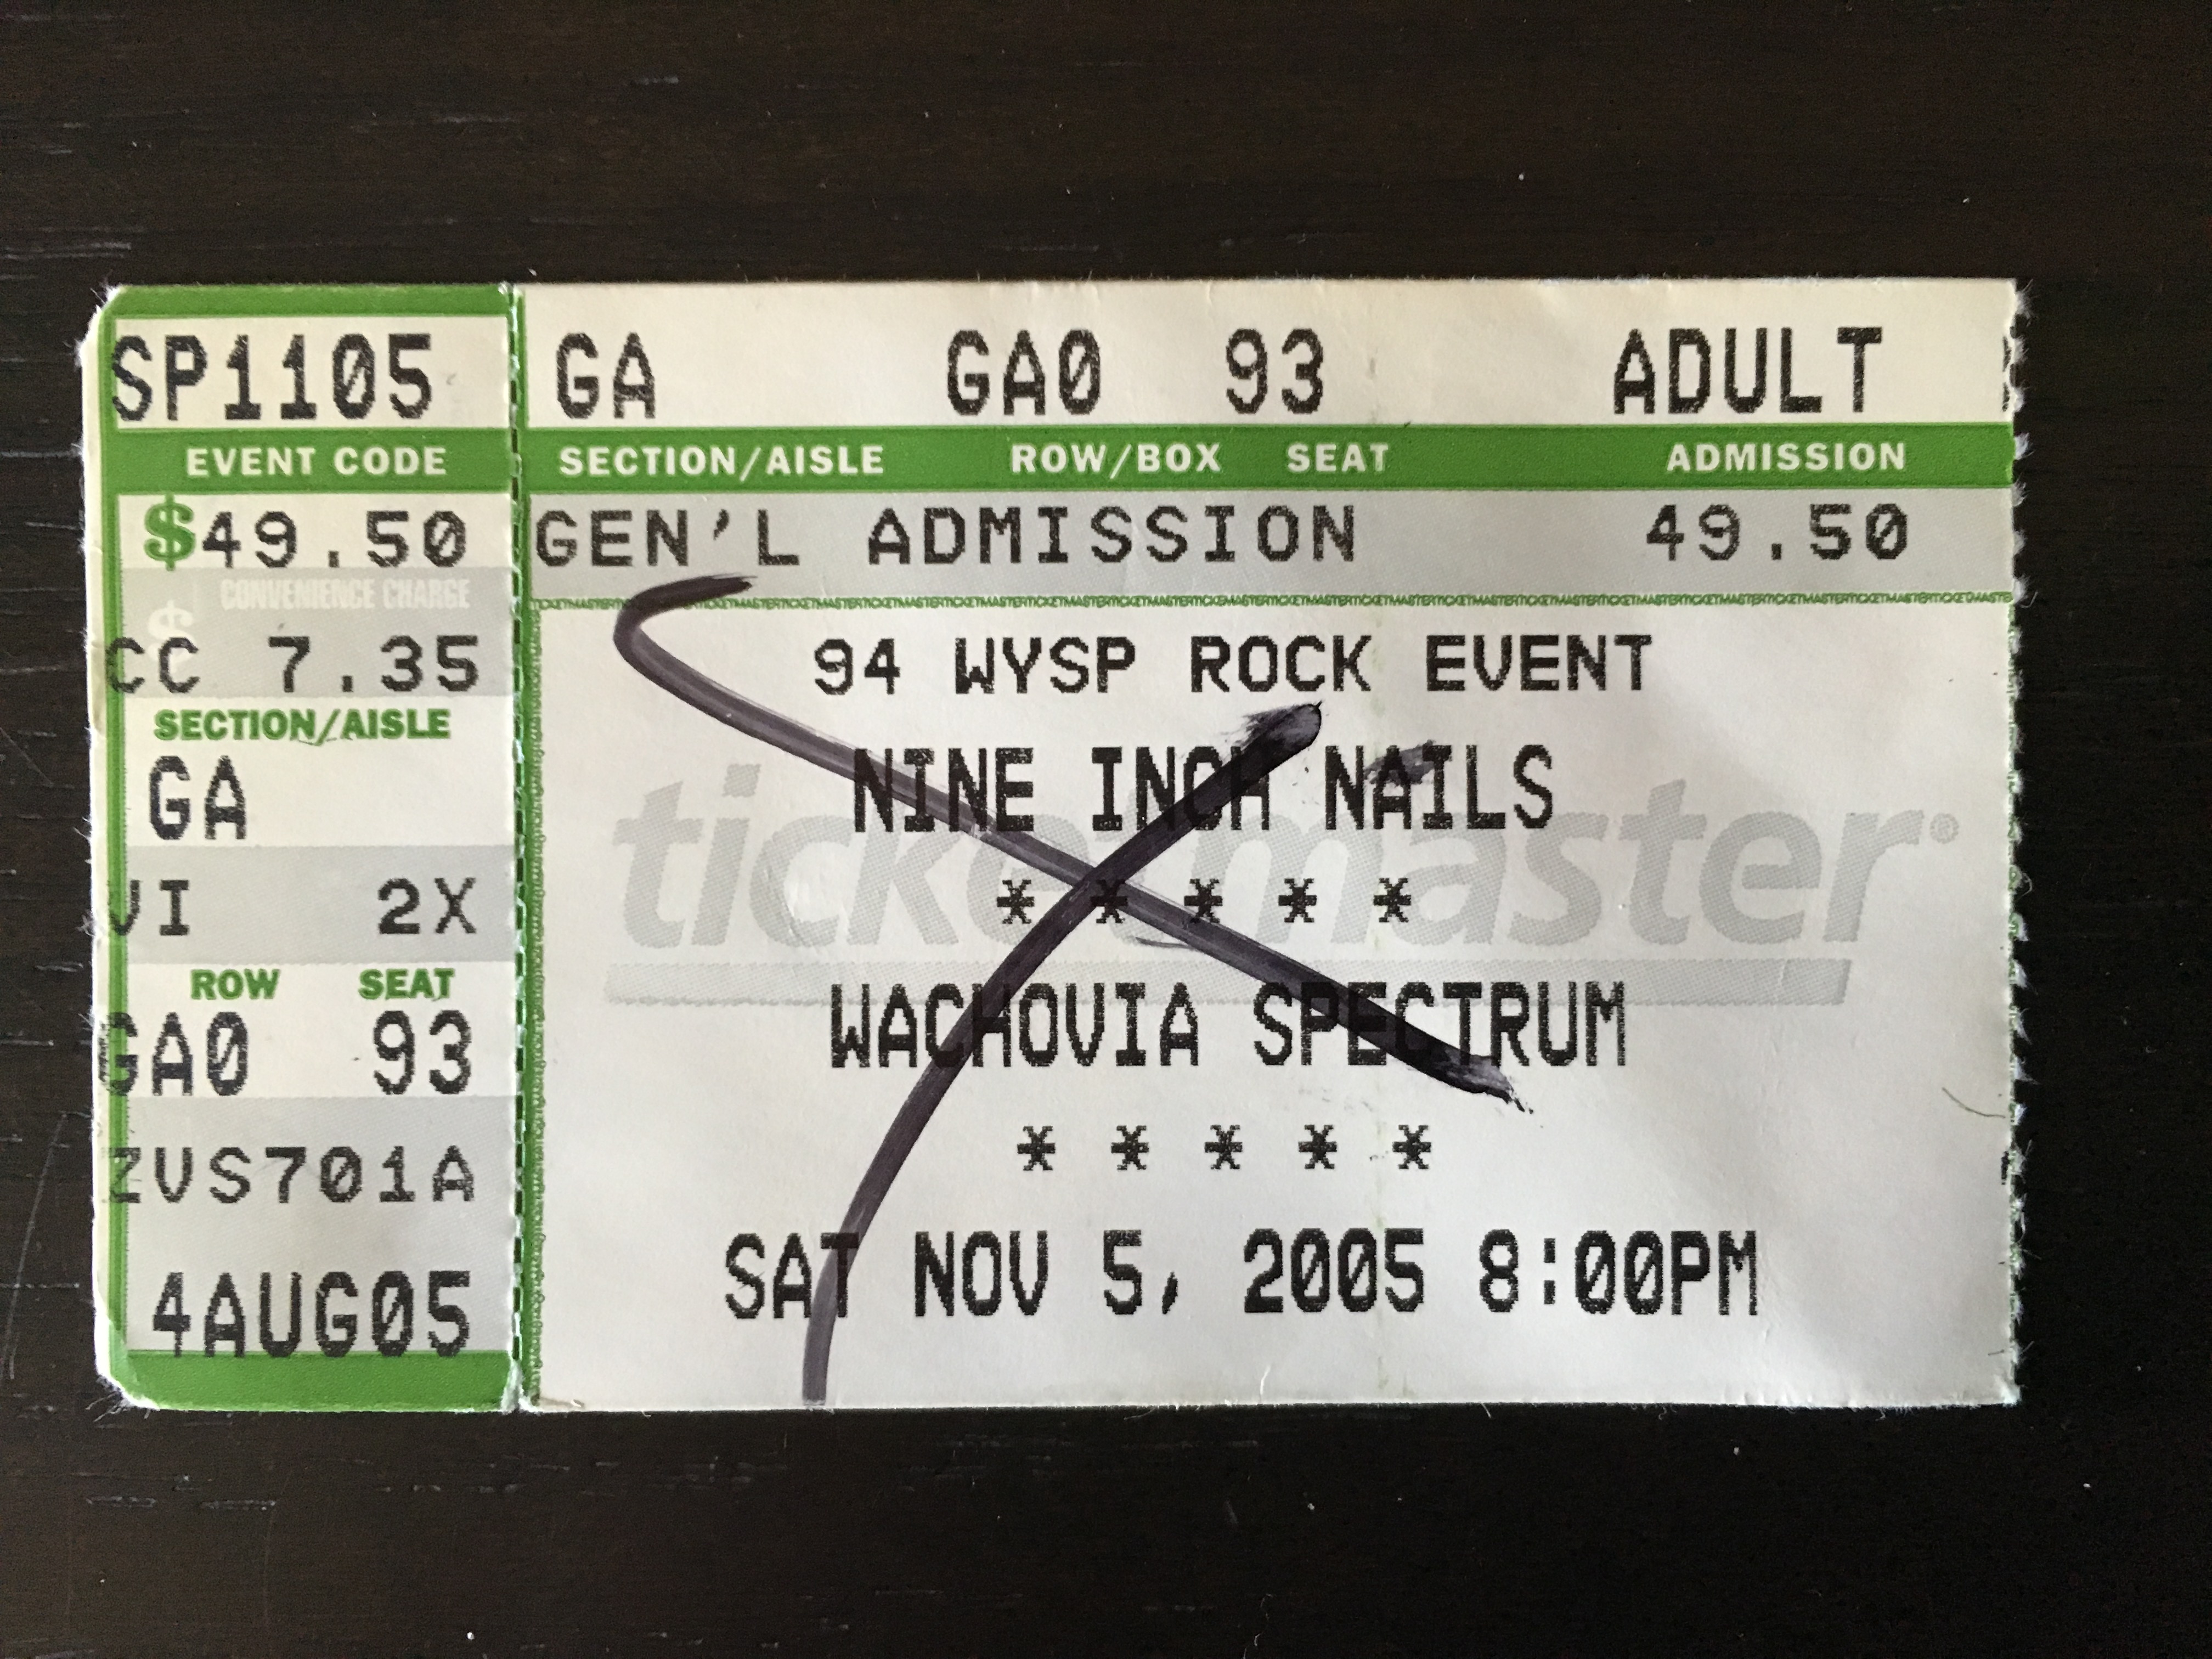 2005/11/05 Ticket